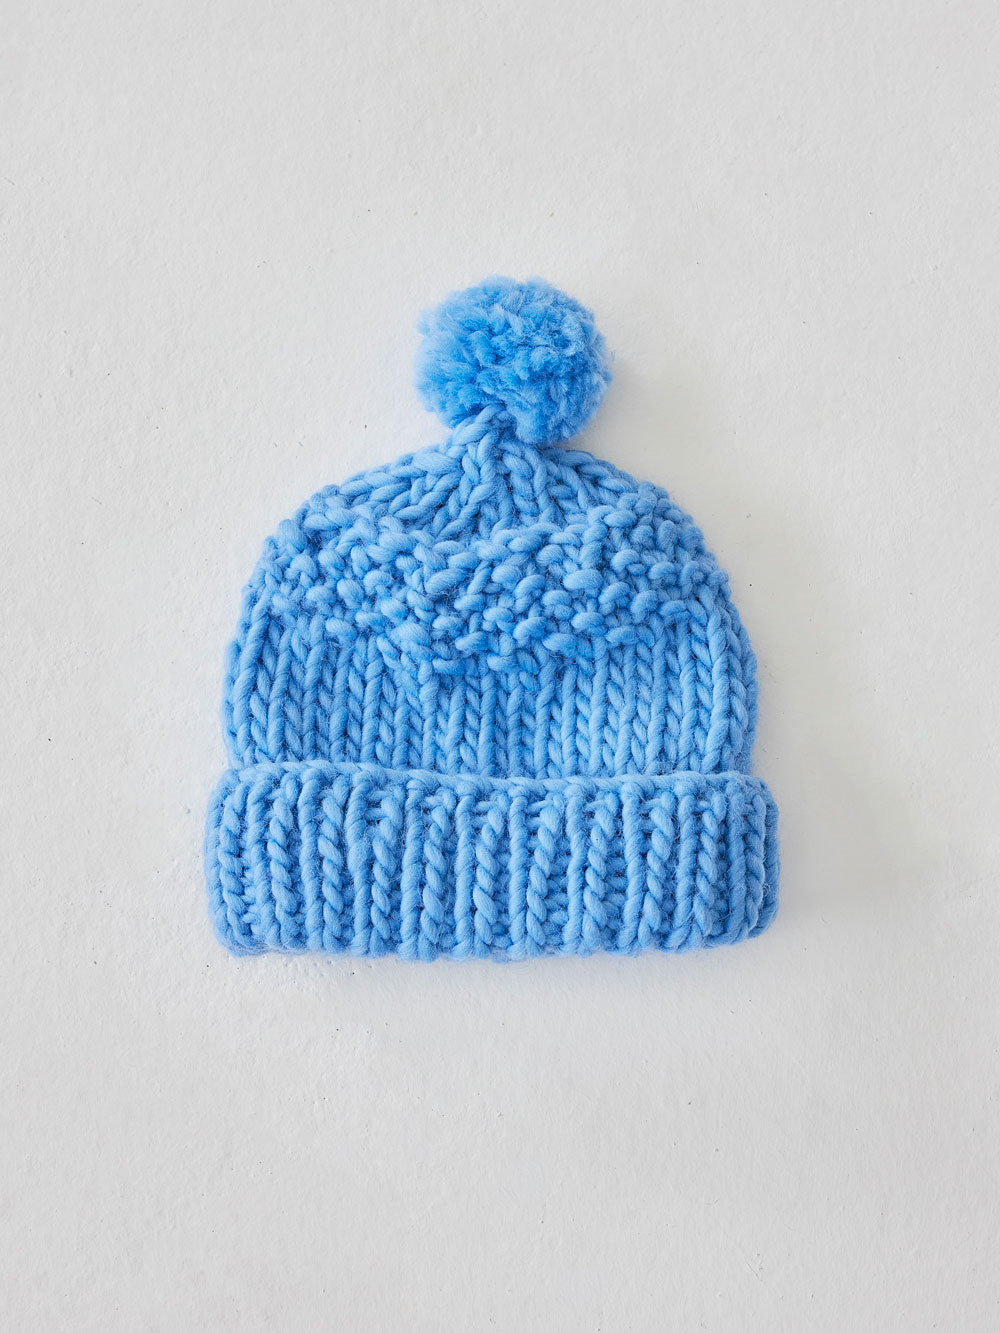 Rachel Beanie knitting kit in baby blues